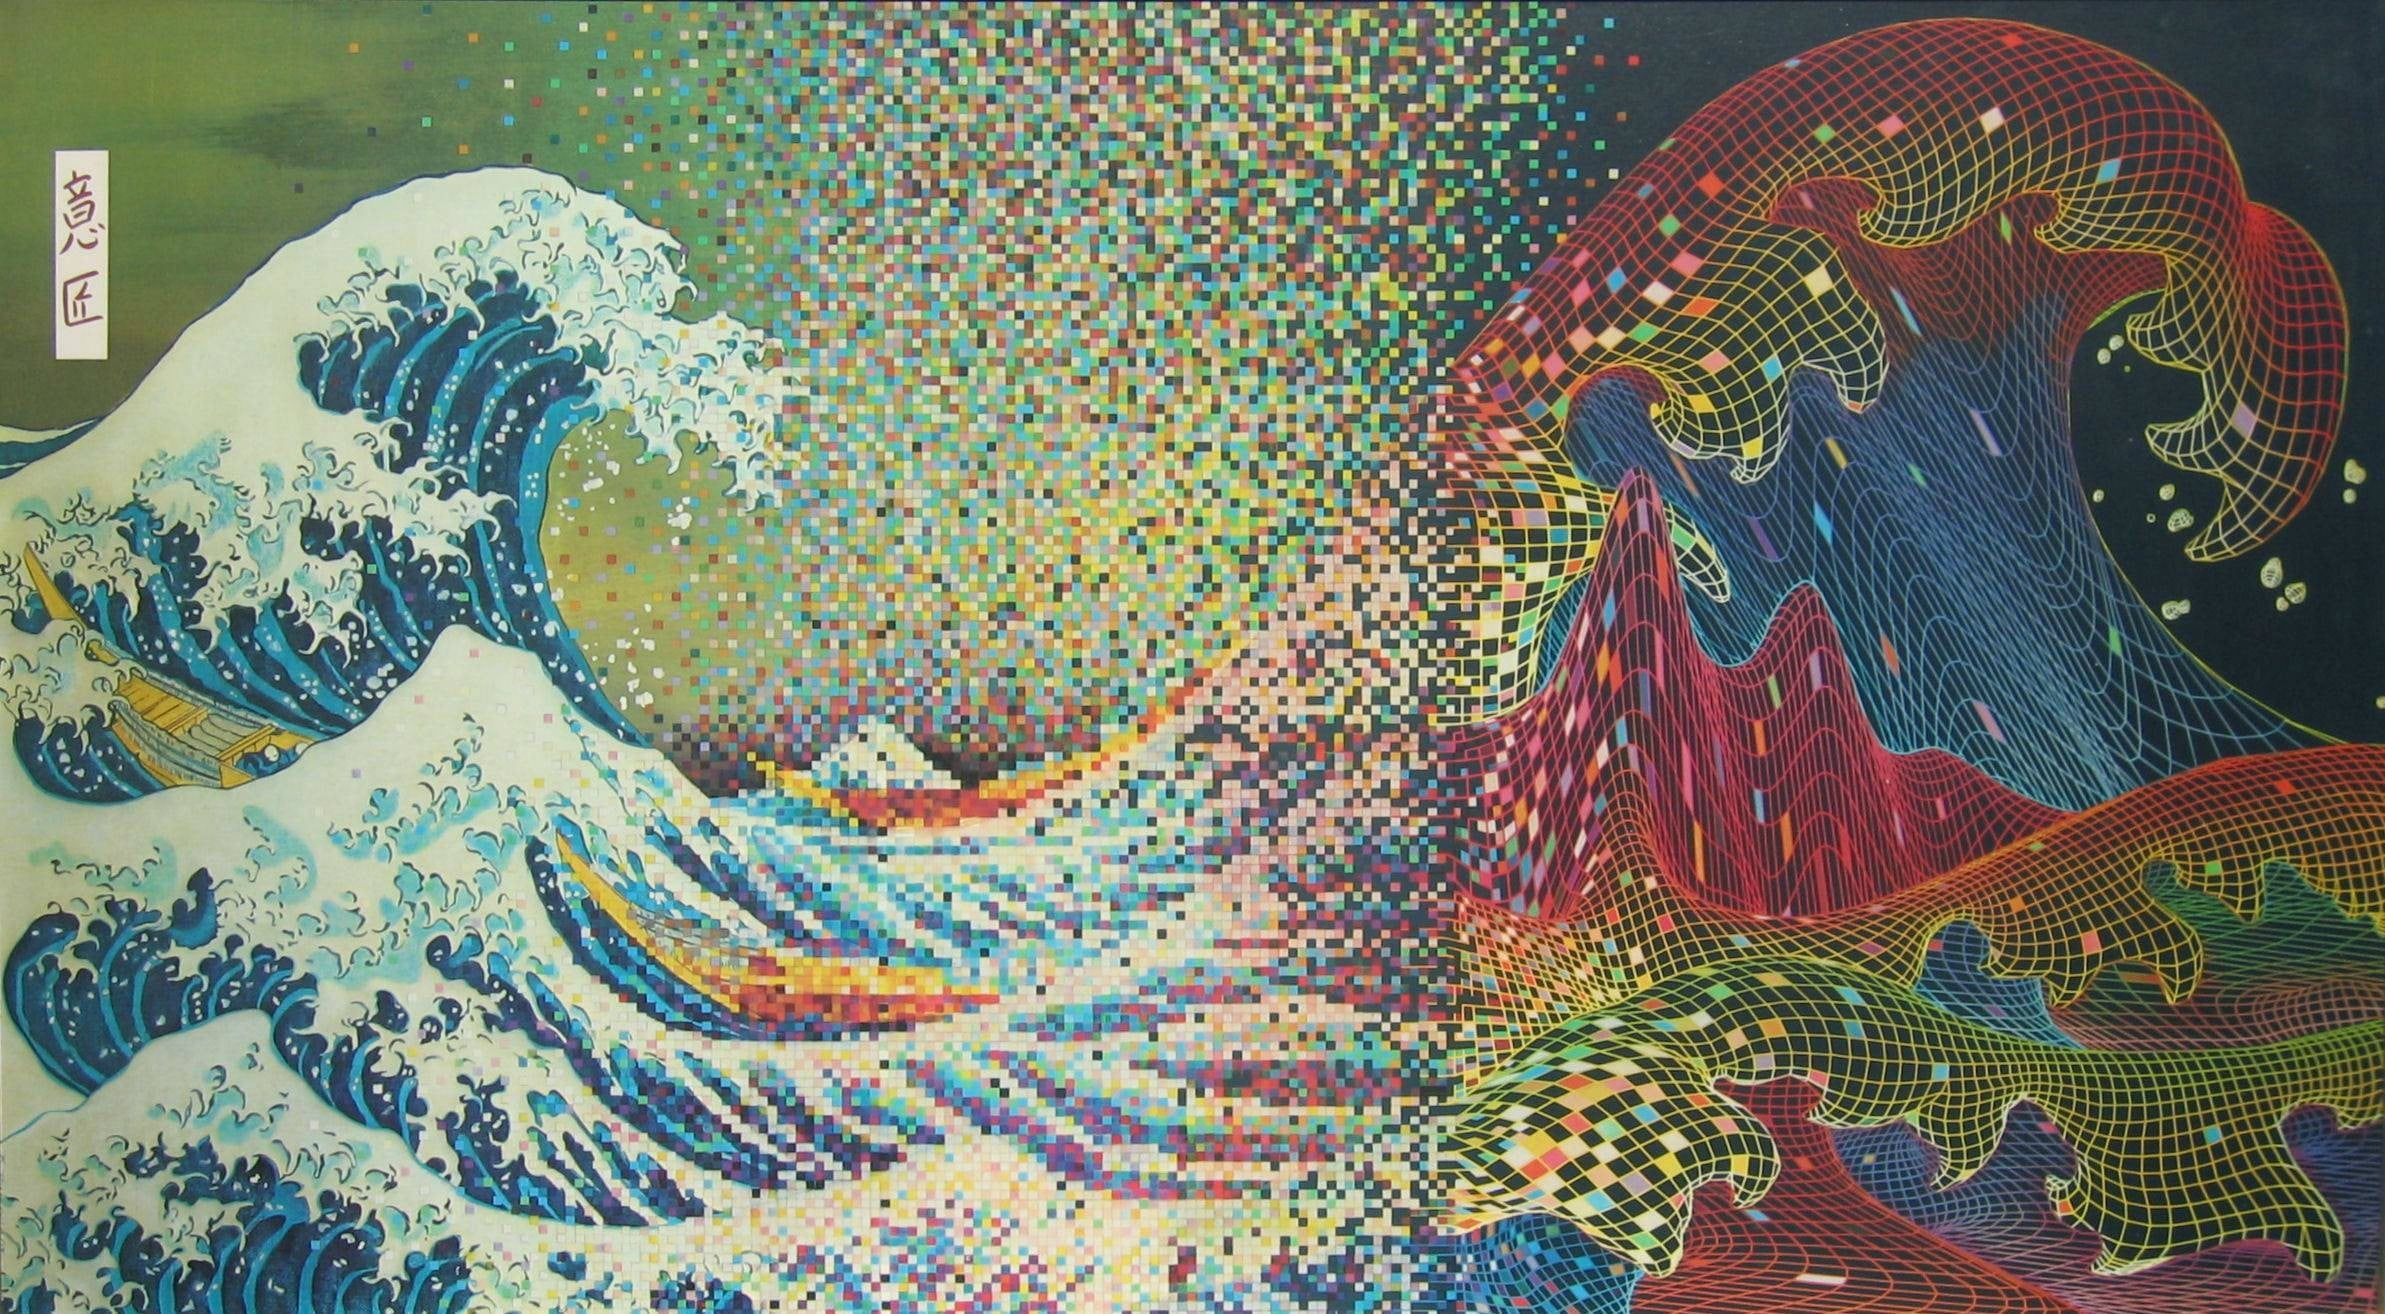 2385x1314 The Great Wave of the Kanagawa Album on Imgur